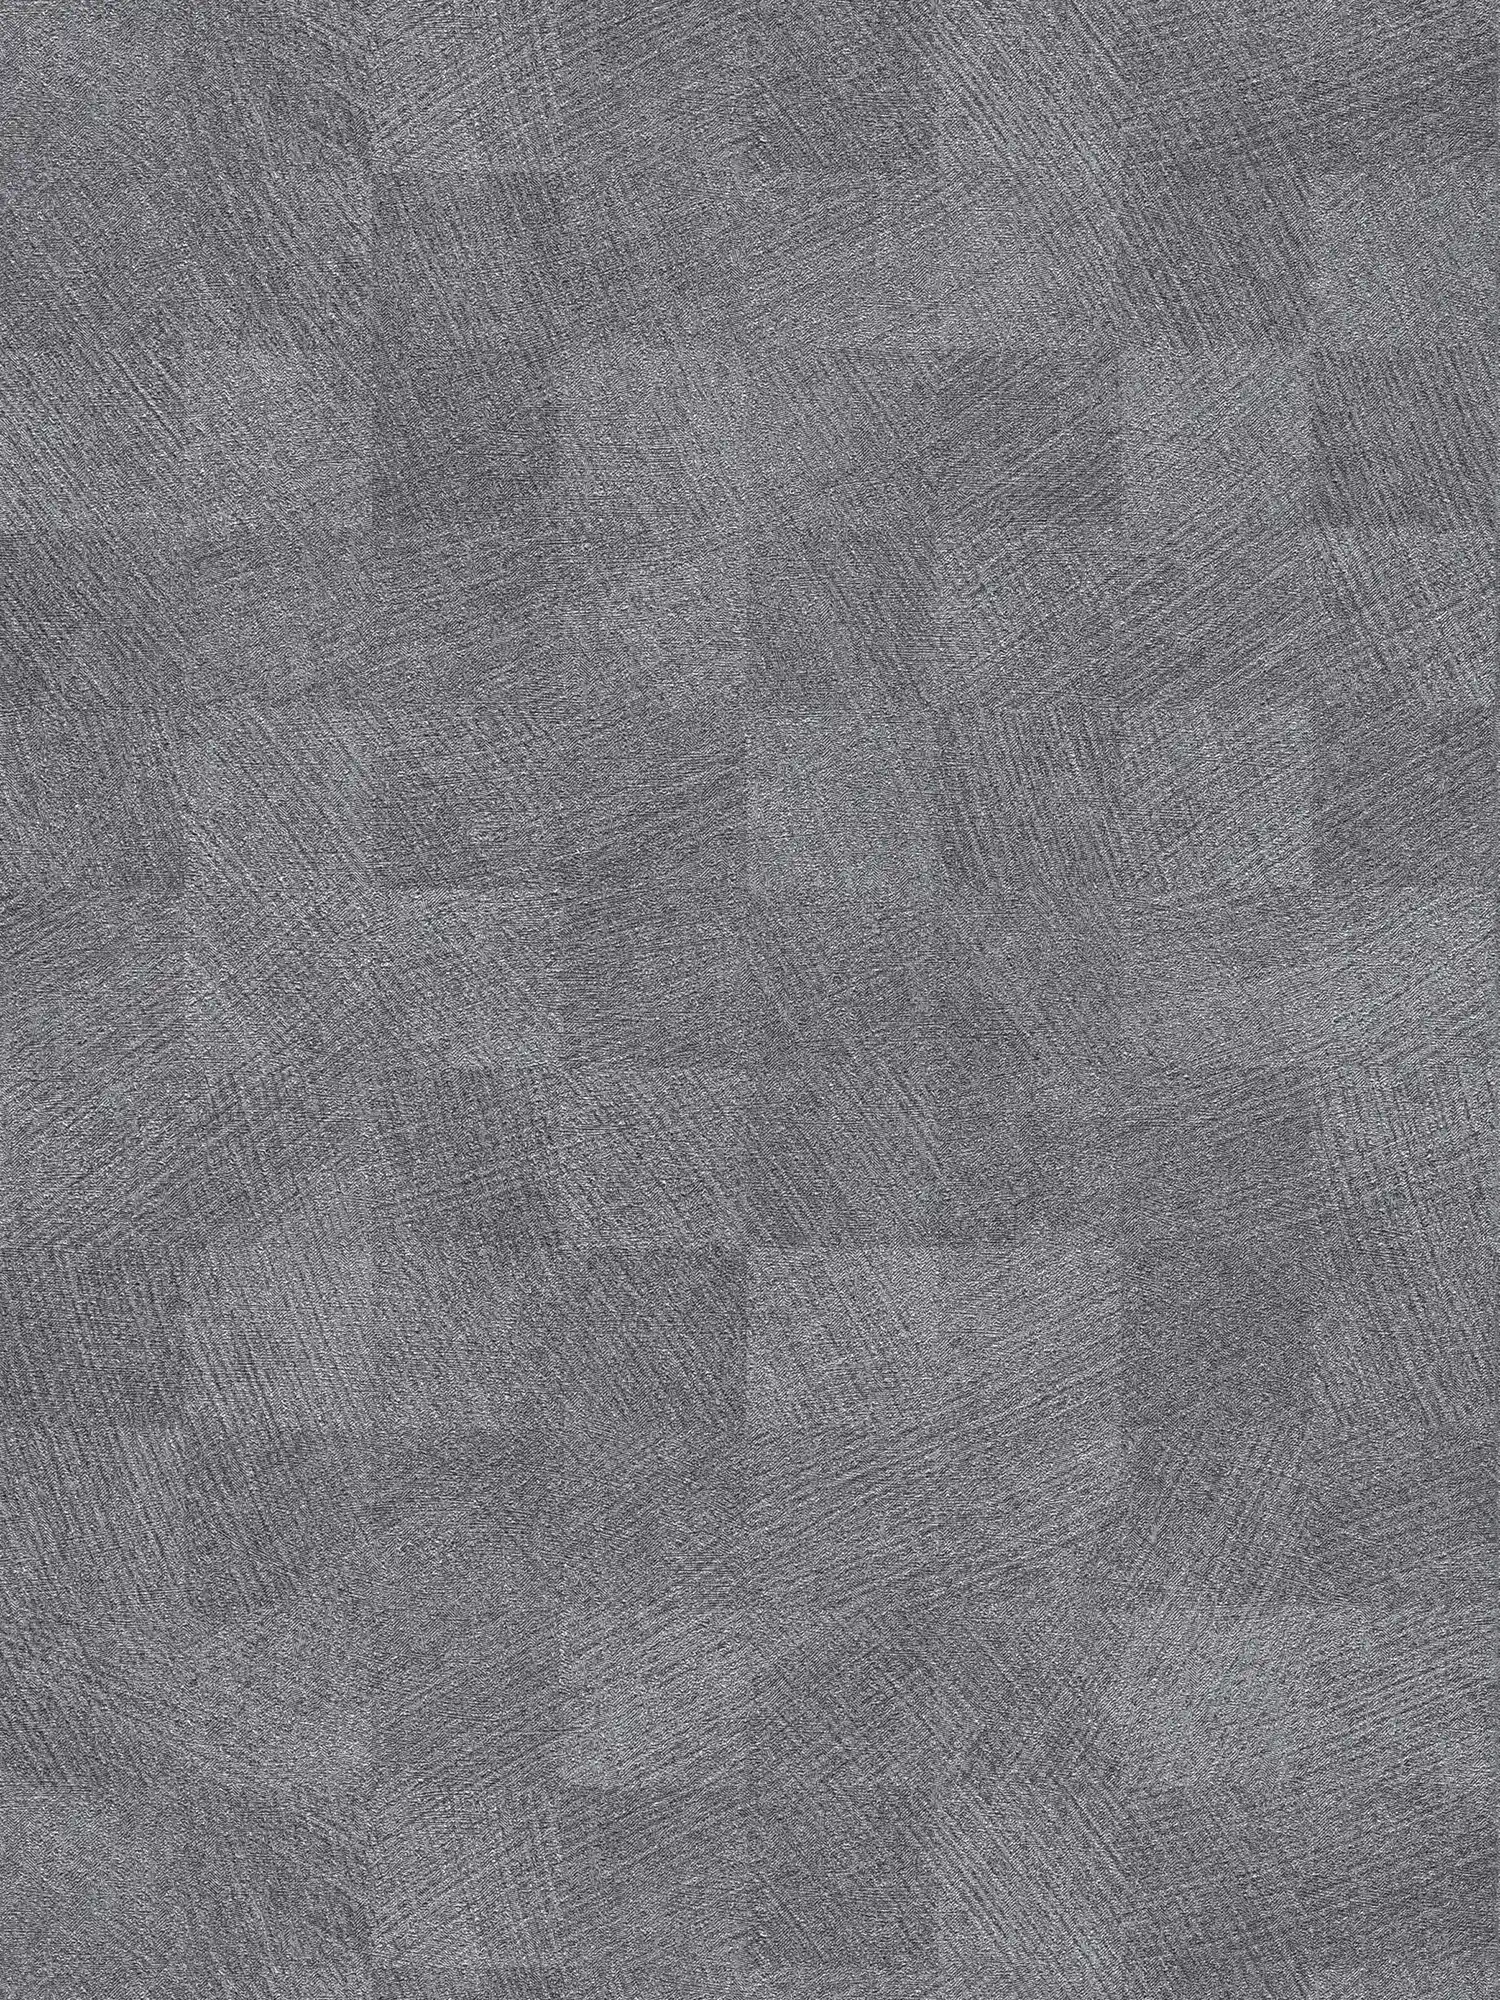 Metallic wallpaper dark grey check pattern with gloss effect - grey, metallic
